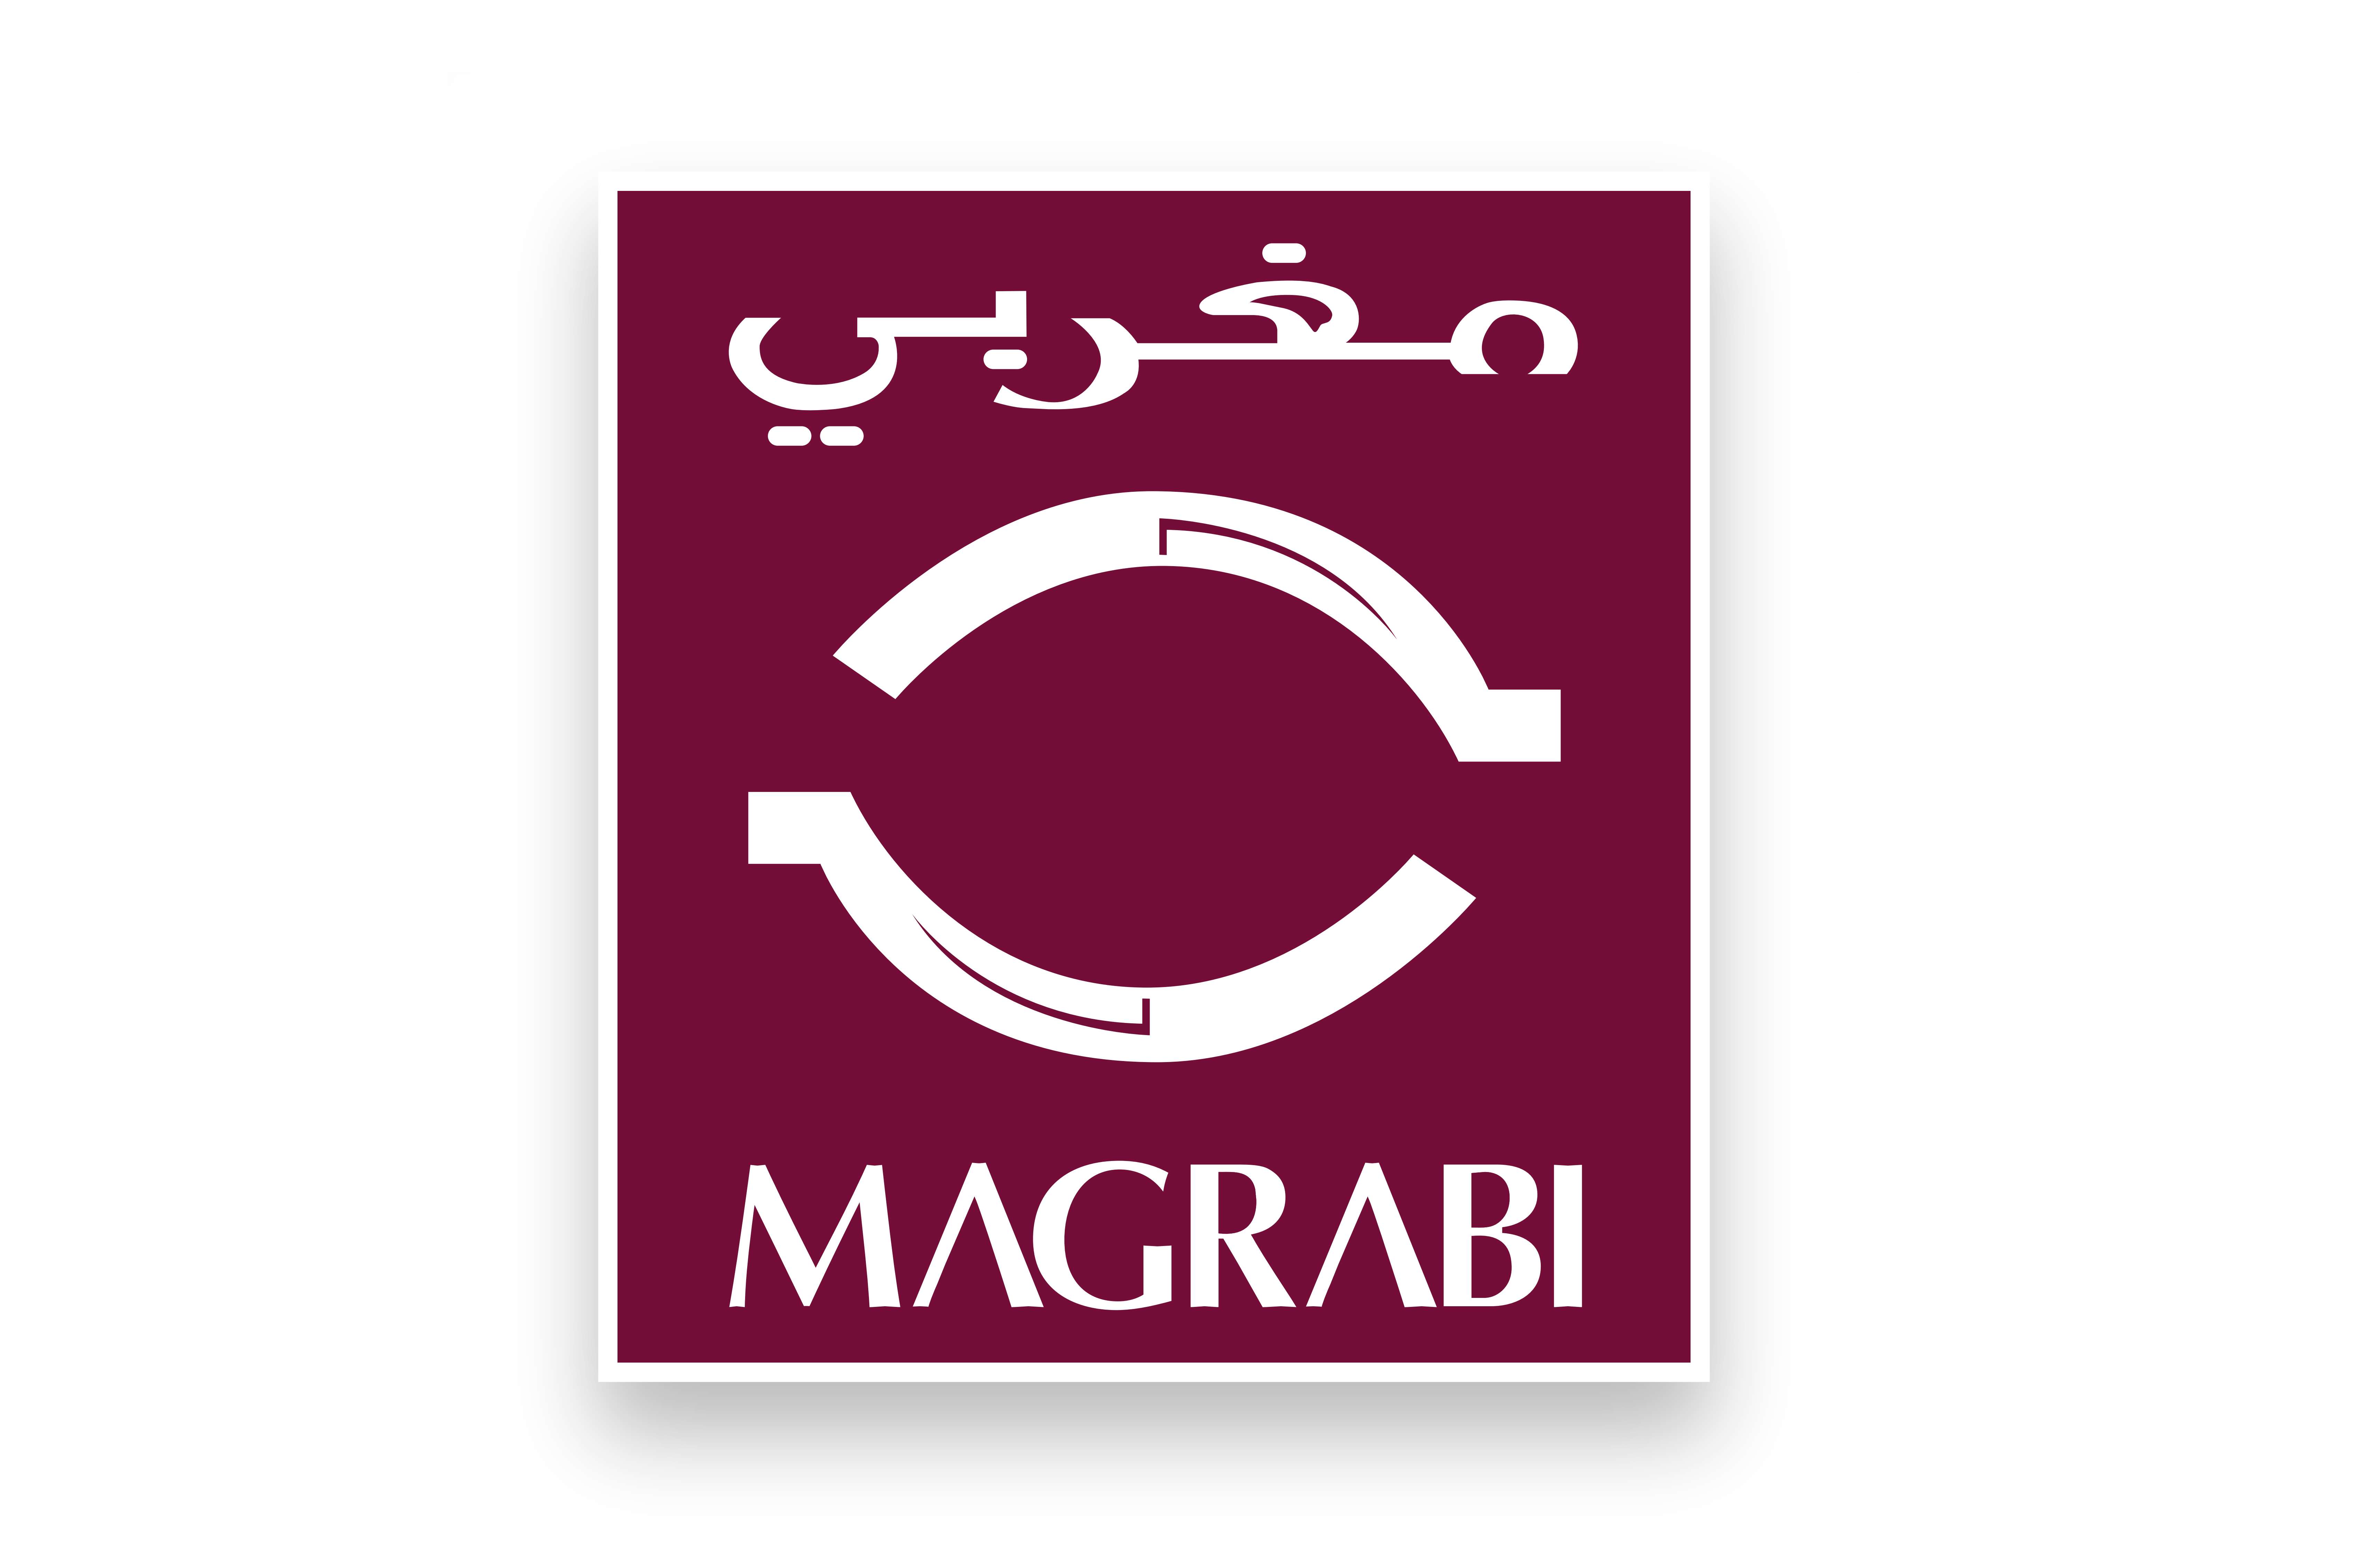 8_magrabi logo_1.jpg img-responsive